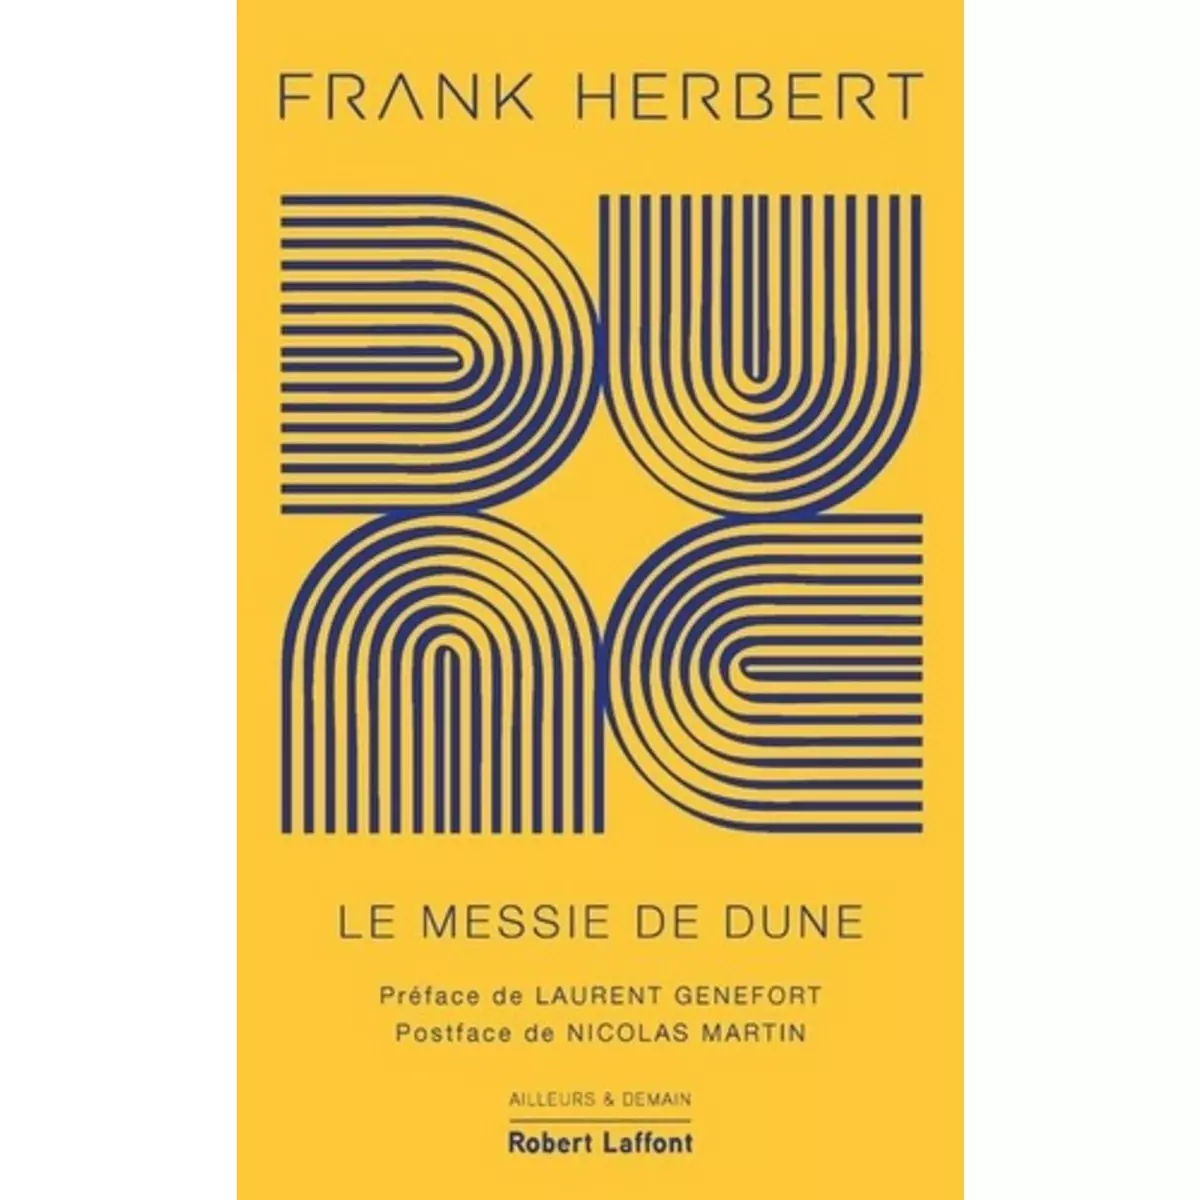  LE CYCLE DE DUNE TOME 2 : LE MESSIE DE DUNE. EDITION COLLECTOR, Herbert Frank